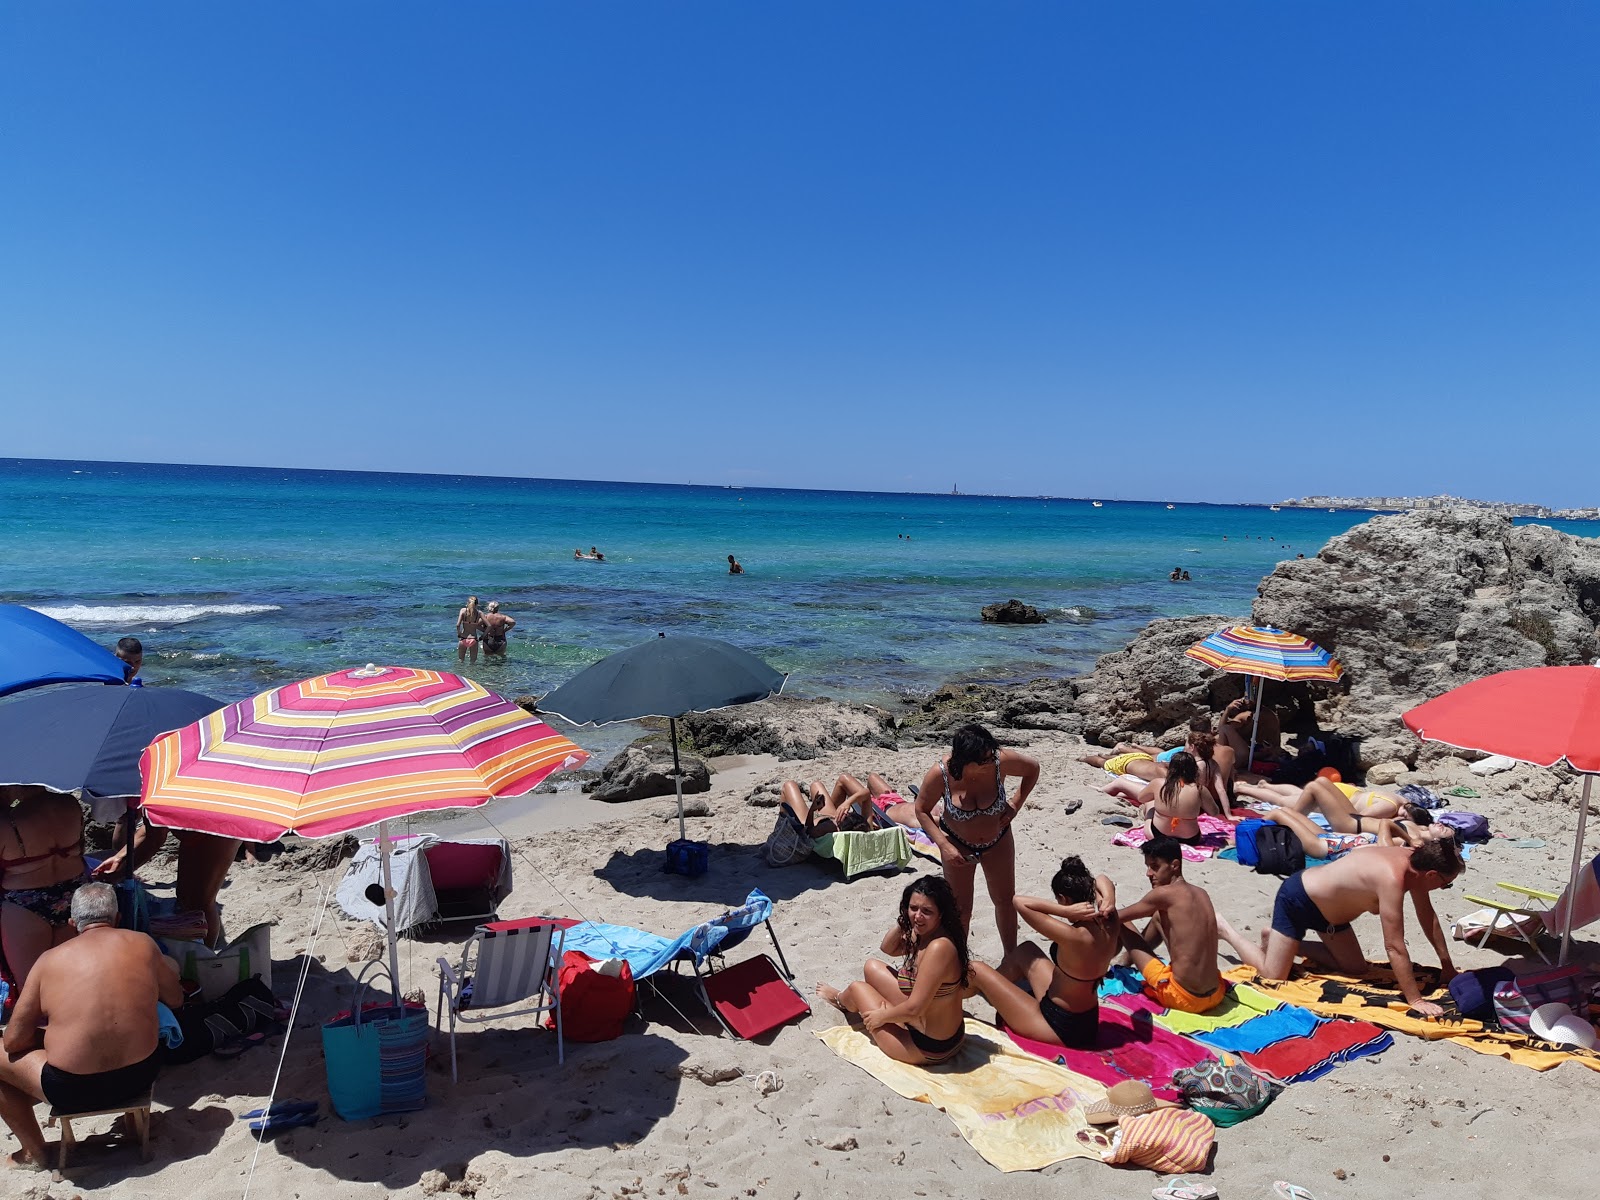 Fotografie cu Spiaggia Gallipoli cu nivelul de curățenie in medie